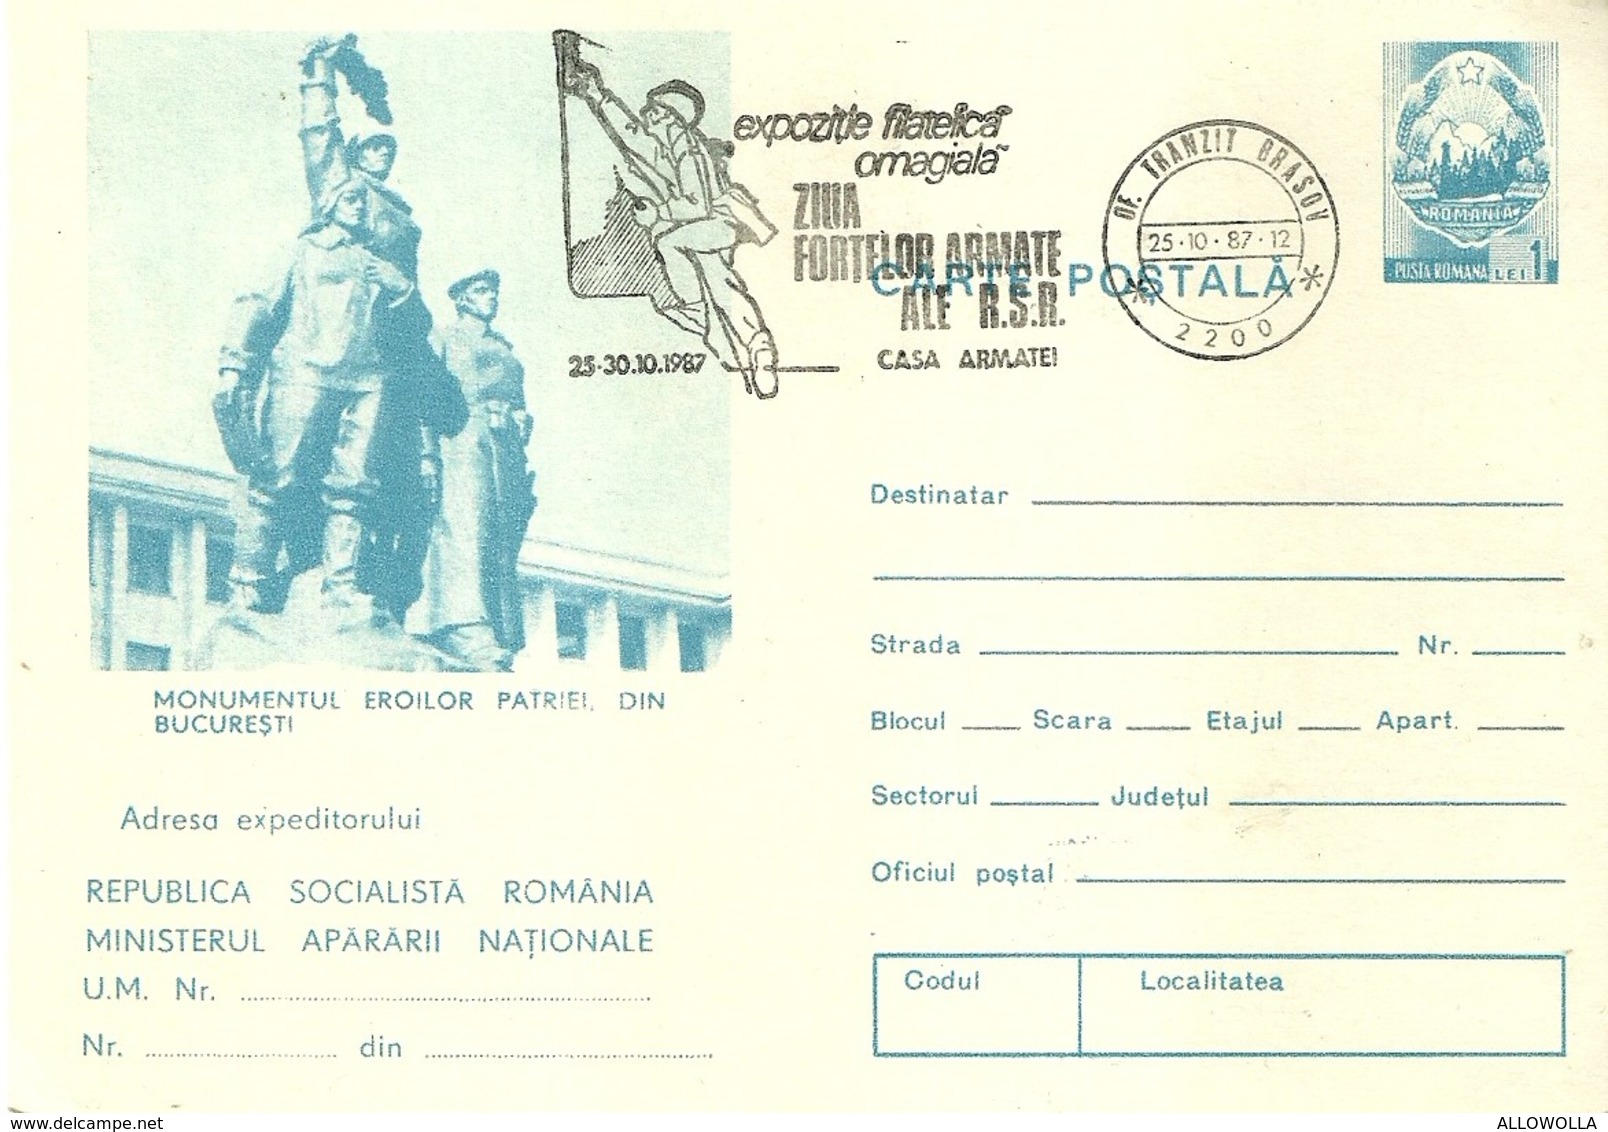 4047 " EXPOZITIE FILATELICA OMAGIALA-ZIUIA FORTELOR  ARMATE ALE R.S.R.-25/39-10-1987" CART. POST. ORIG. NON SPEDITA - Romania